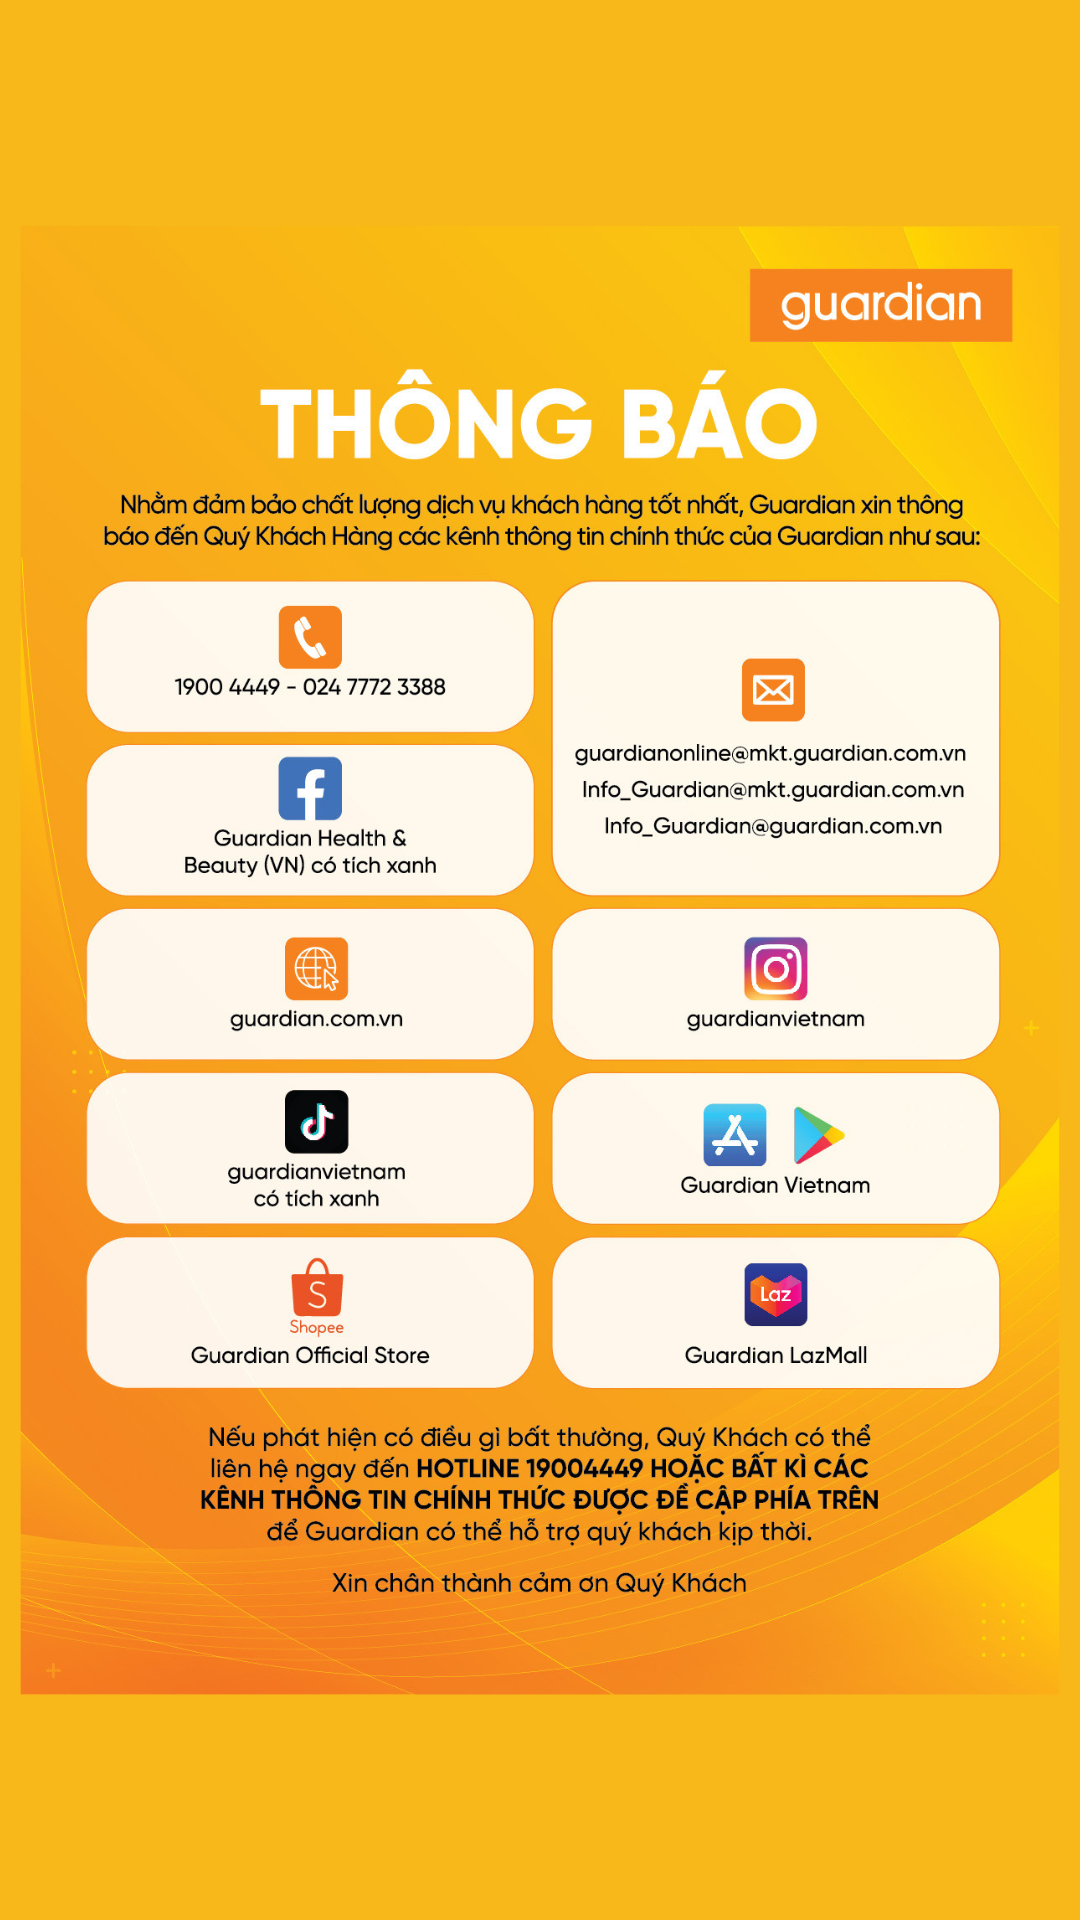 thong-bao-kenh-thong-tin-chinh-thuc-guardian-vietnam